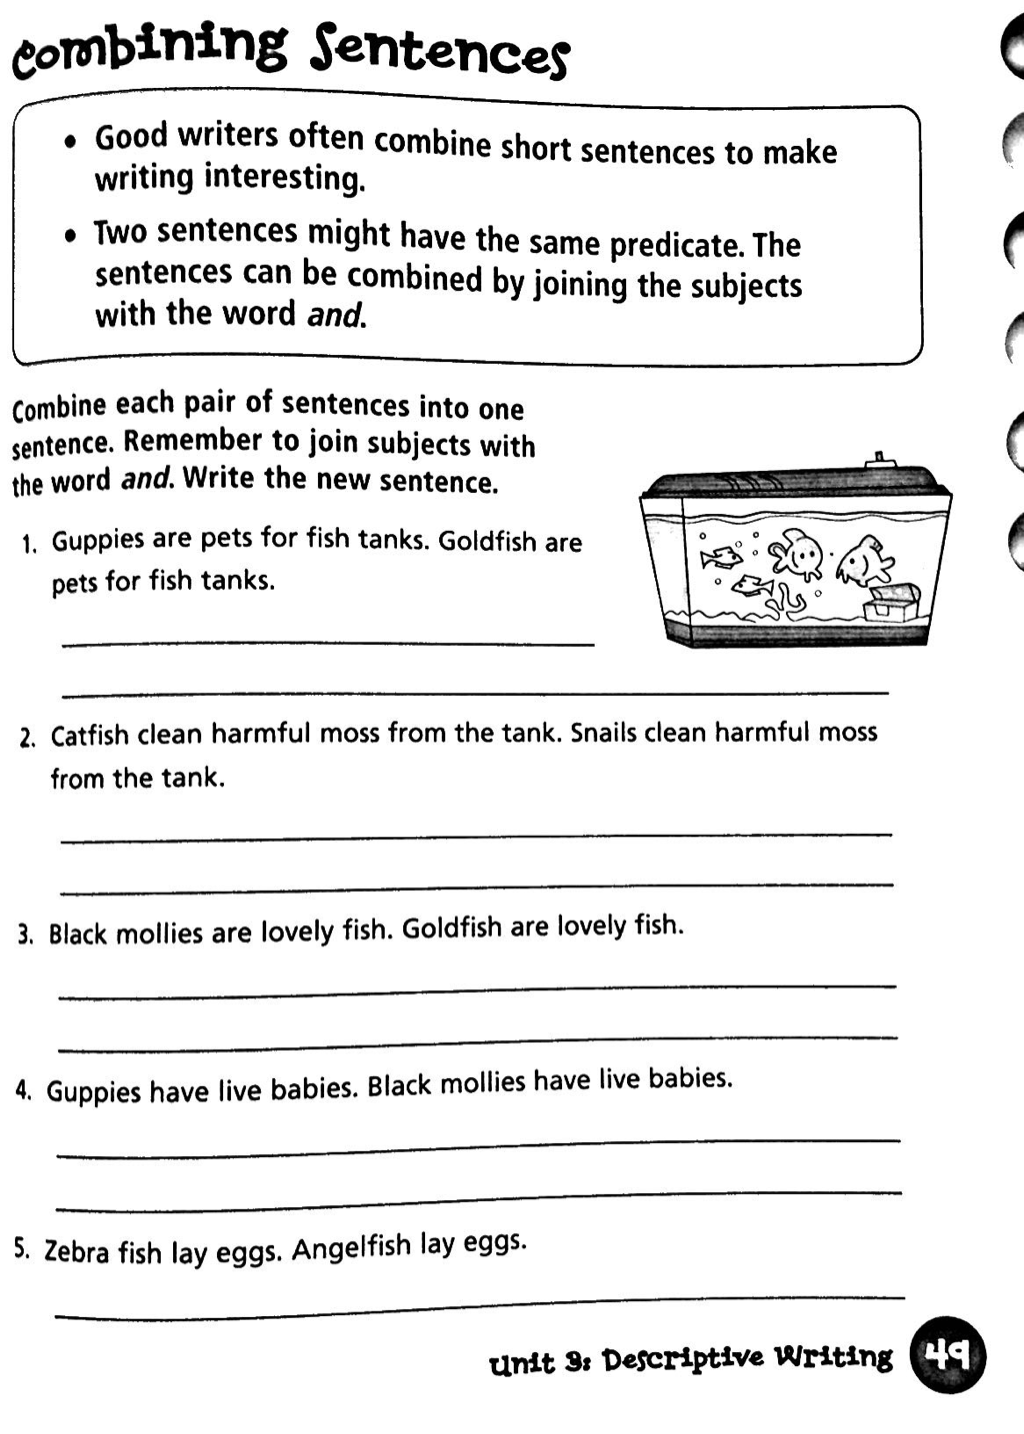 combining-sentences-4th-grade